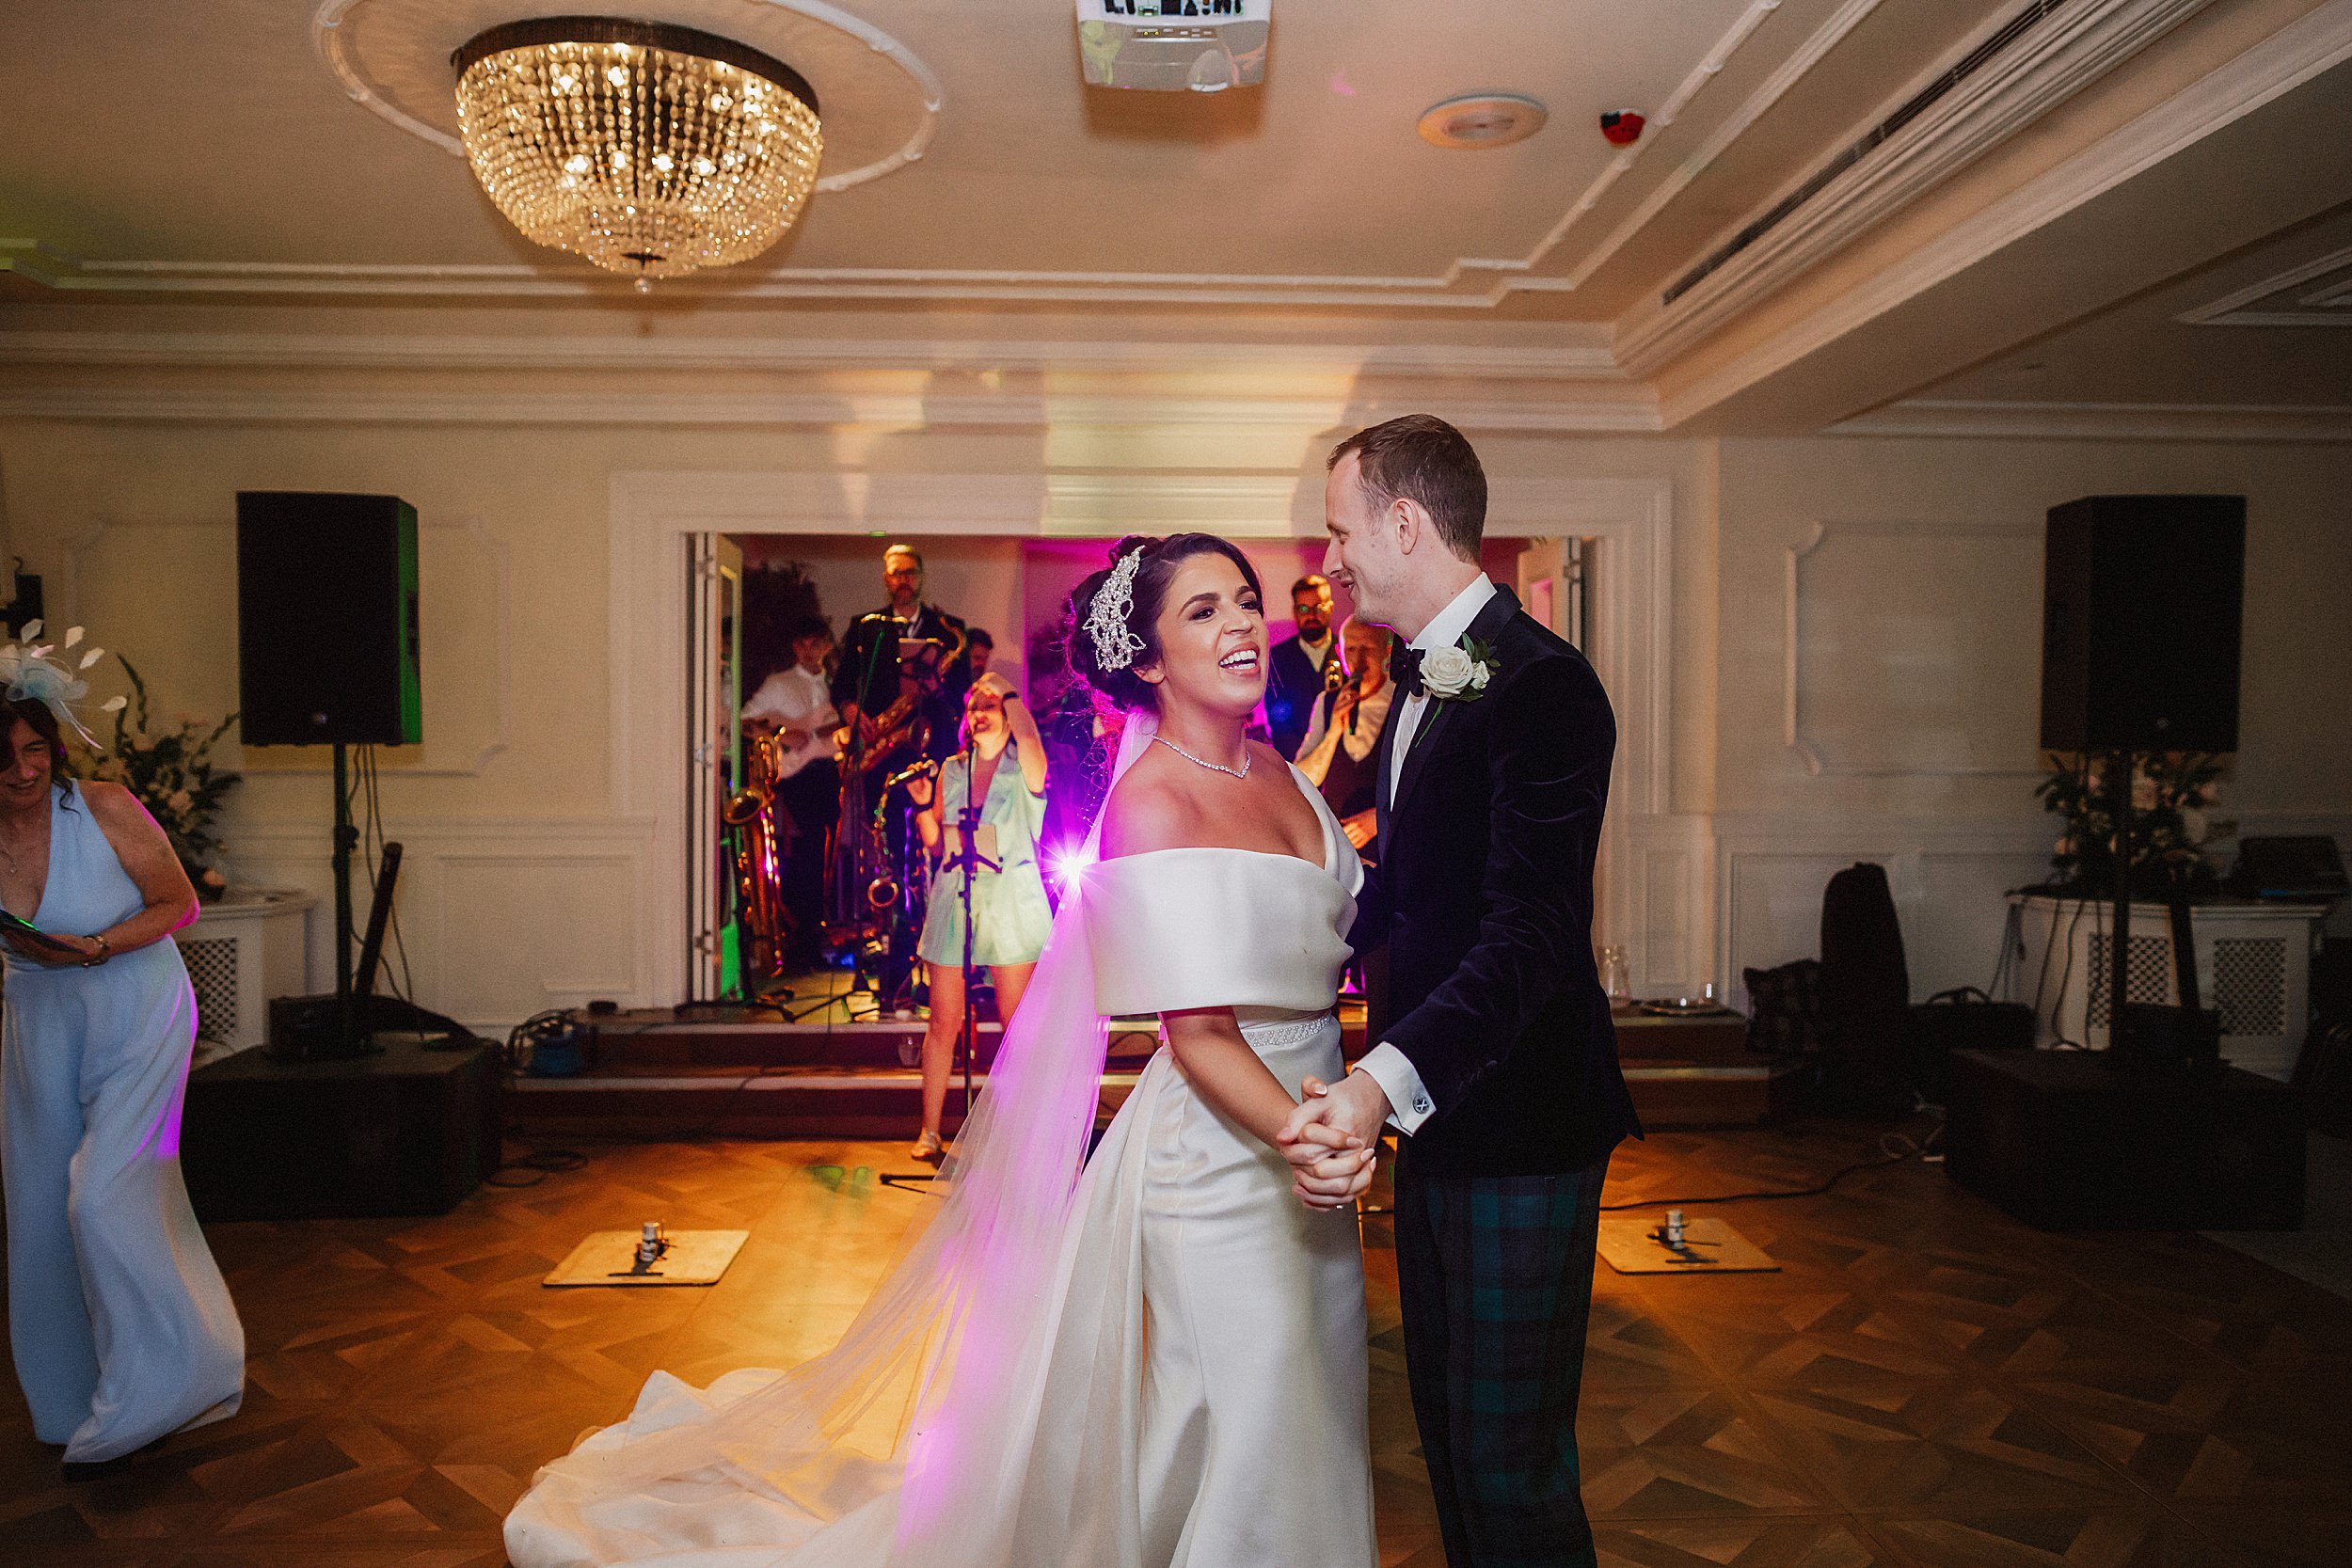 First wedding dance at Lochgreen House Hotel